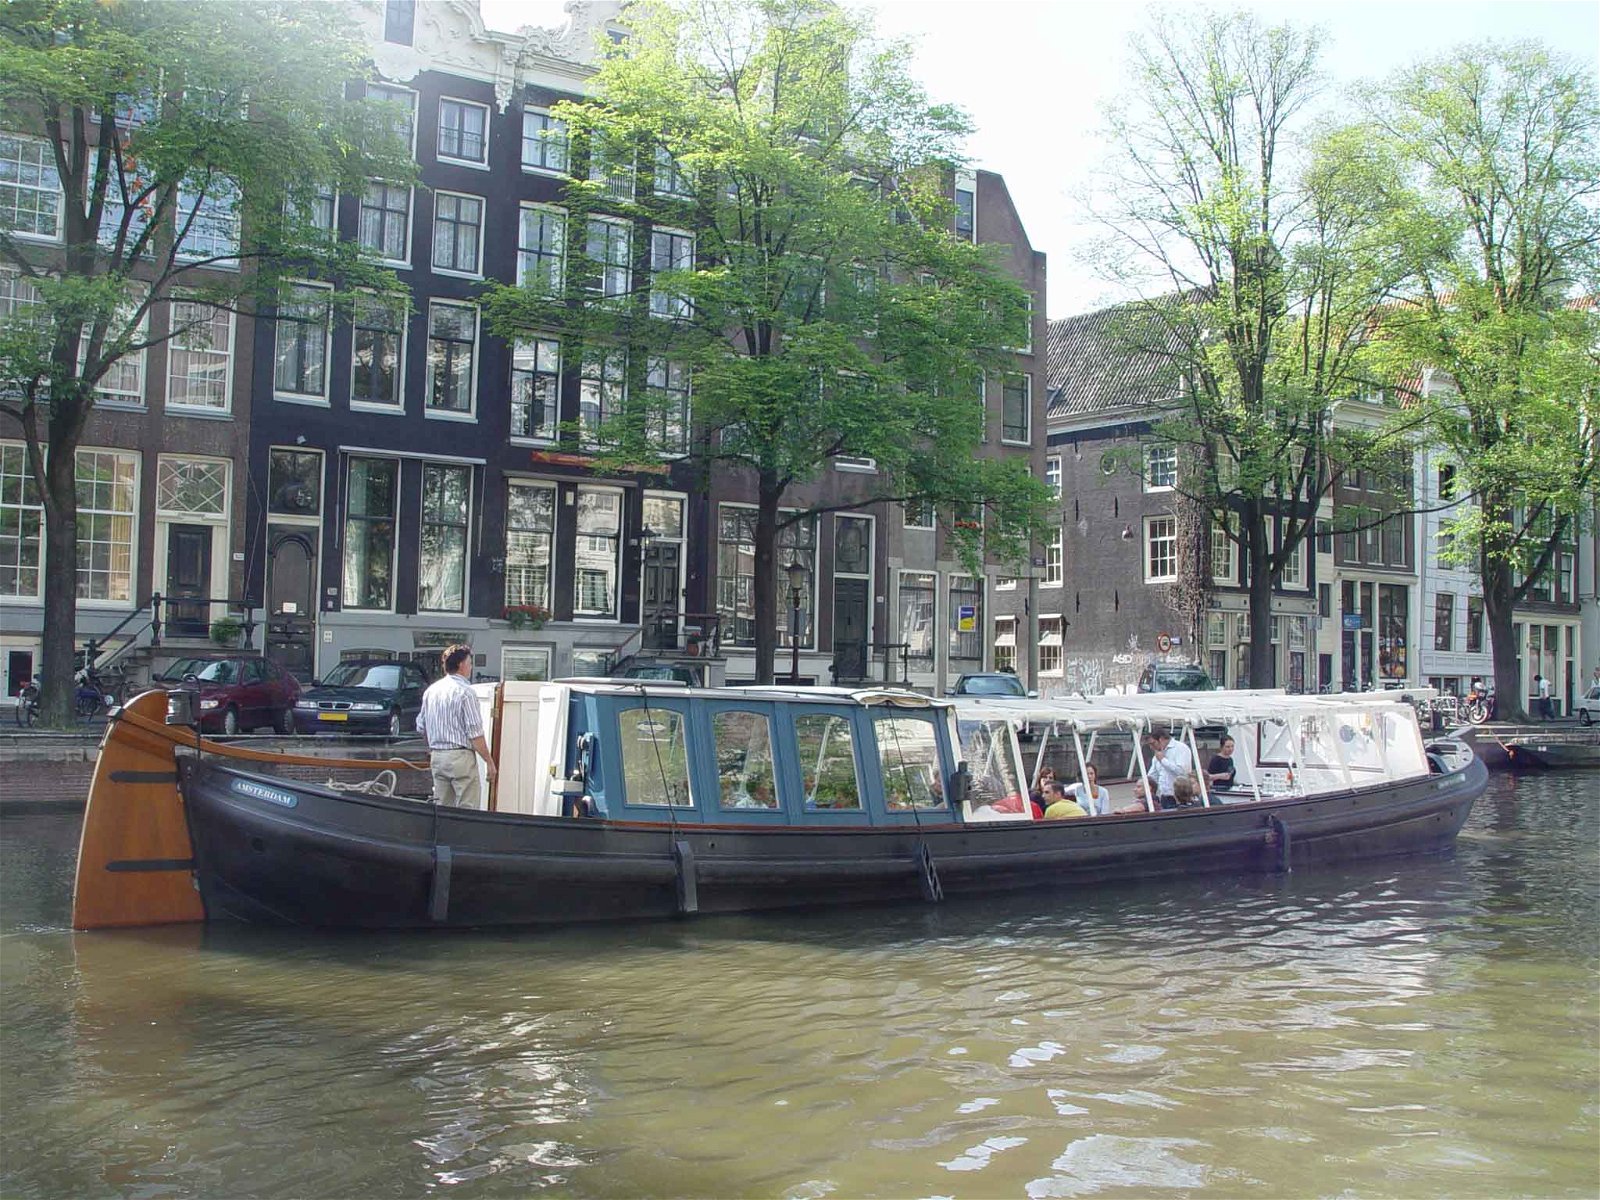 Canal barge Jacob van Lennep